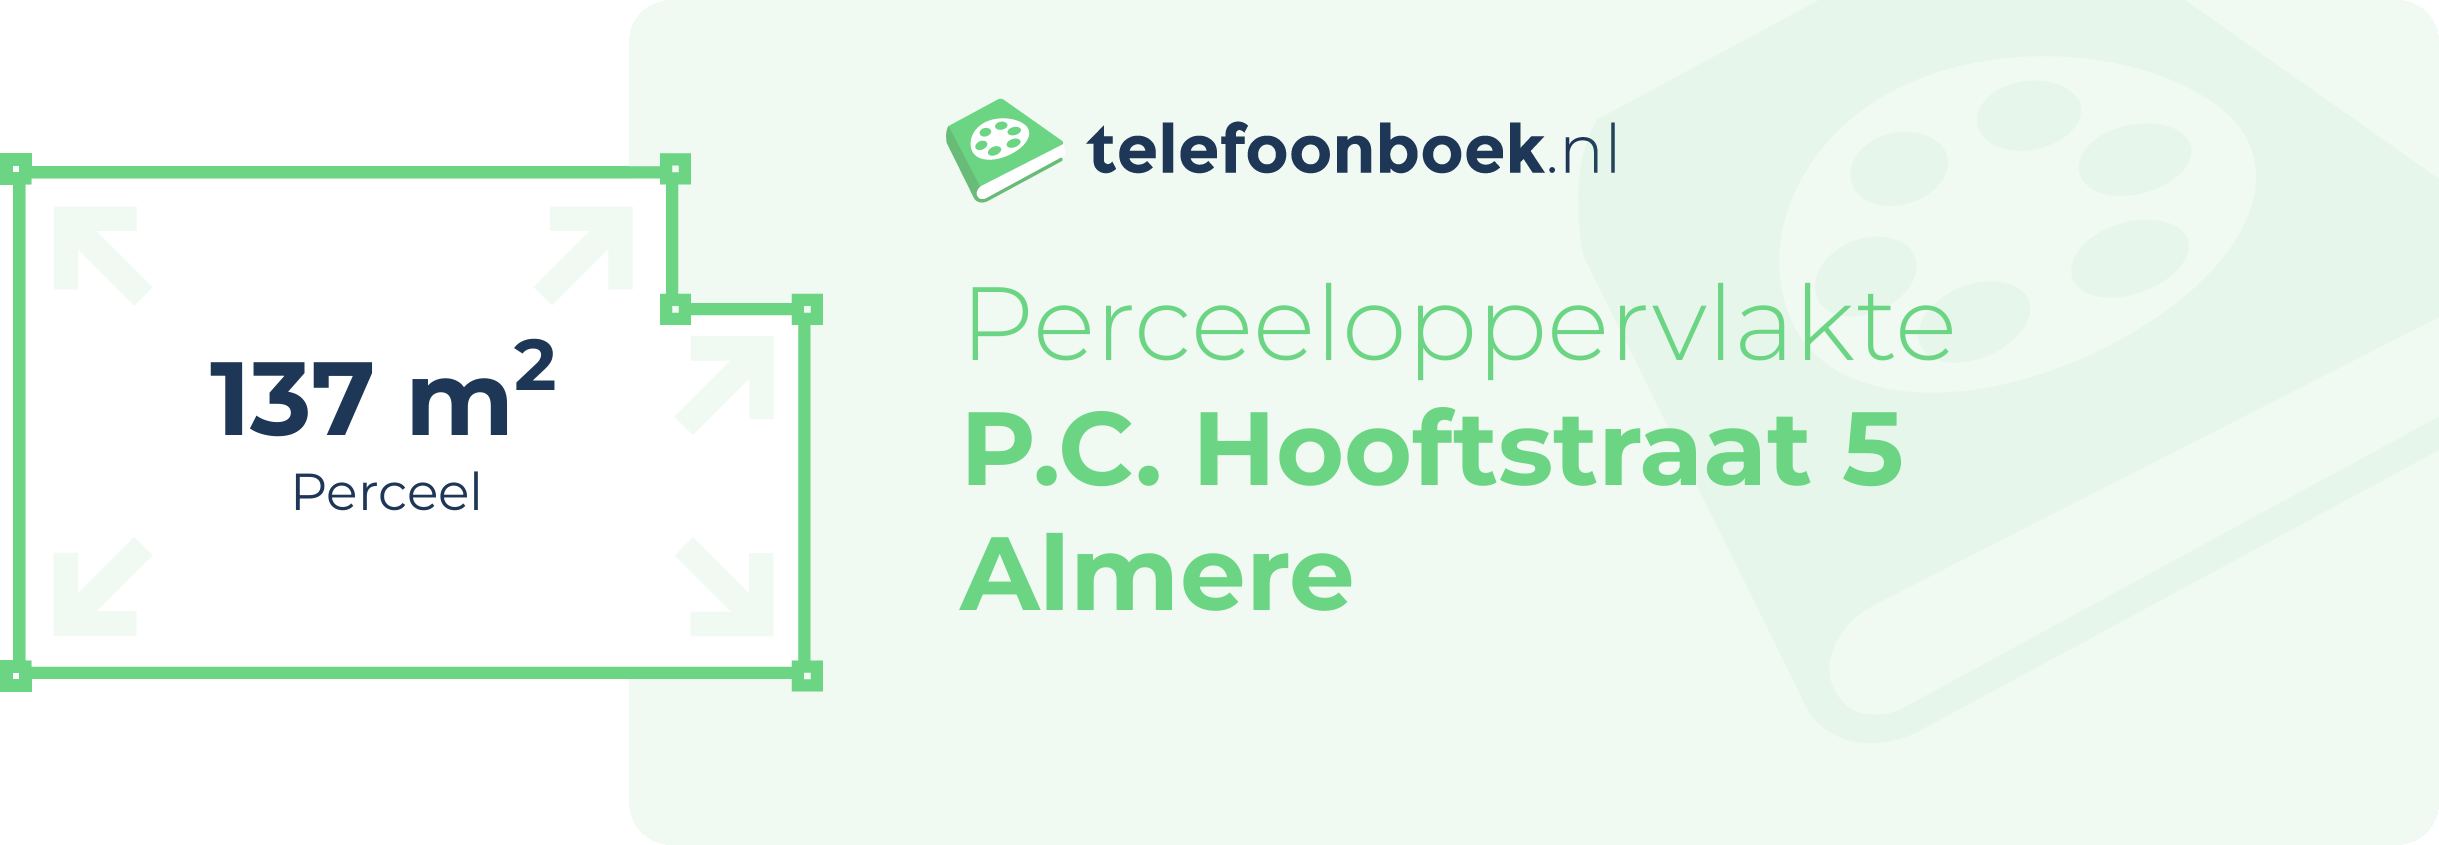 Perceeloppervlakte P.C. Hooftstraat 5 Almere